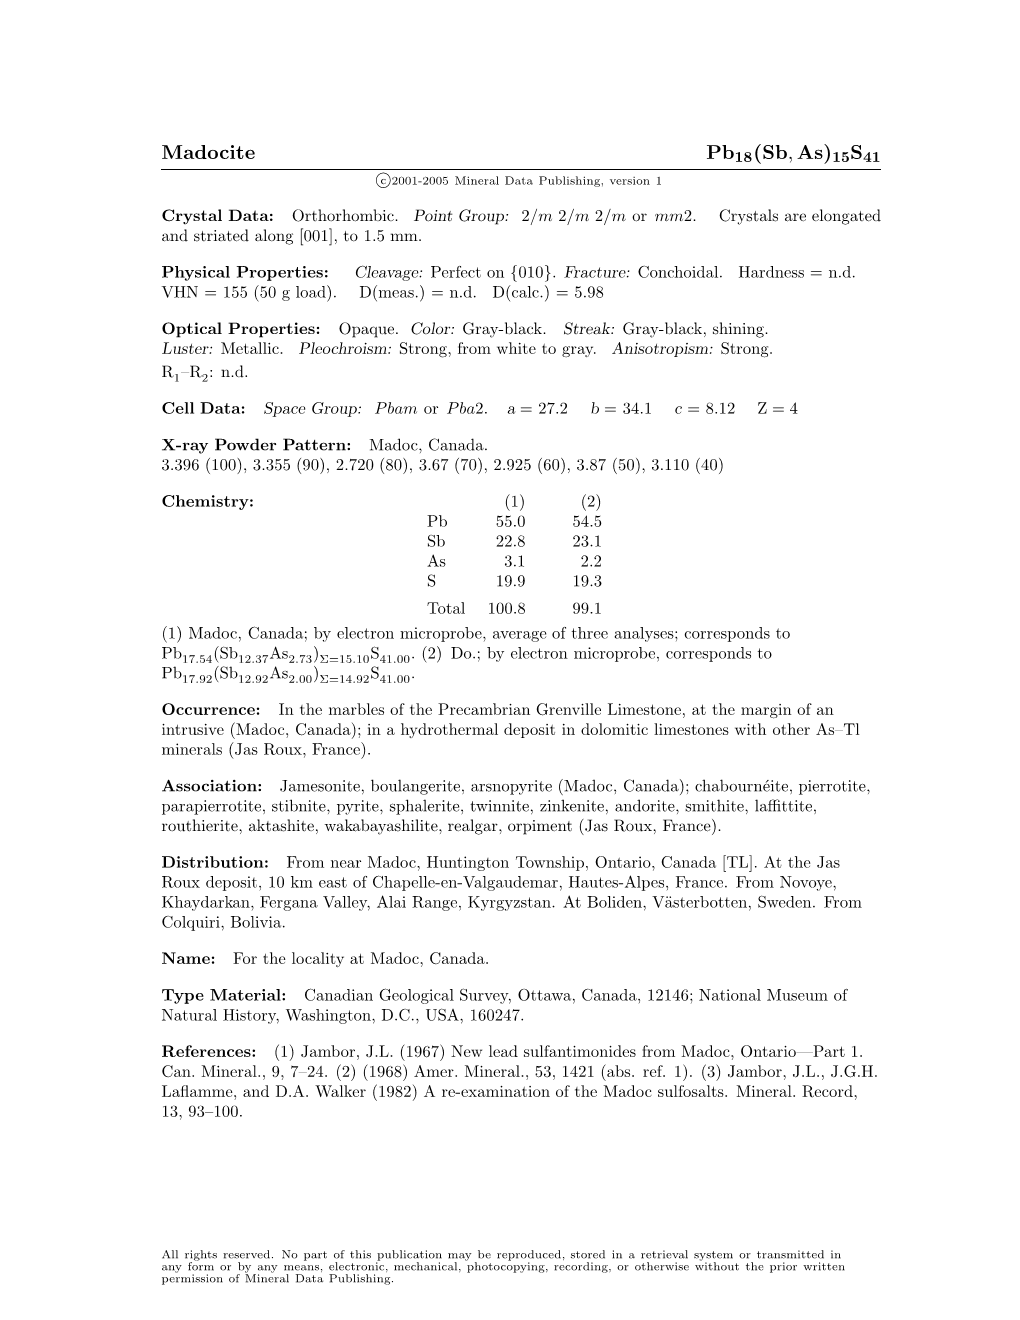 Madocite Pb18(Sb, As)15S41 C 2001-2005 Mineral Data Publishing, Version 1